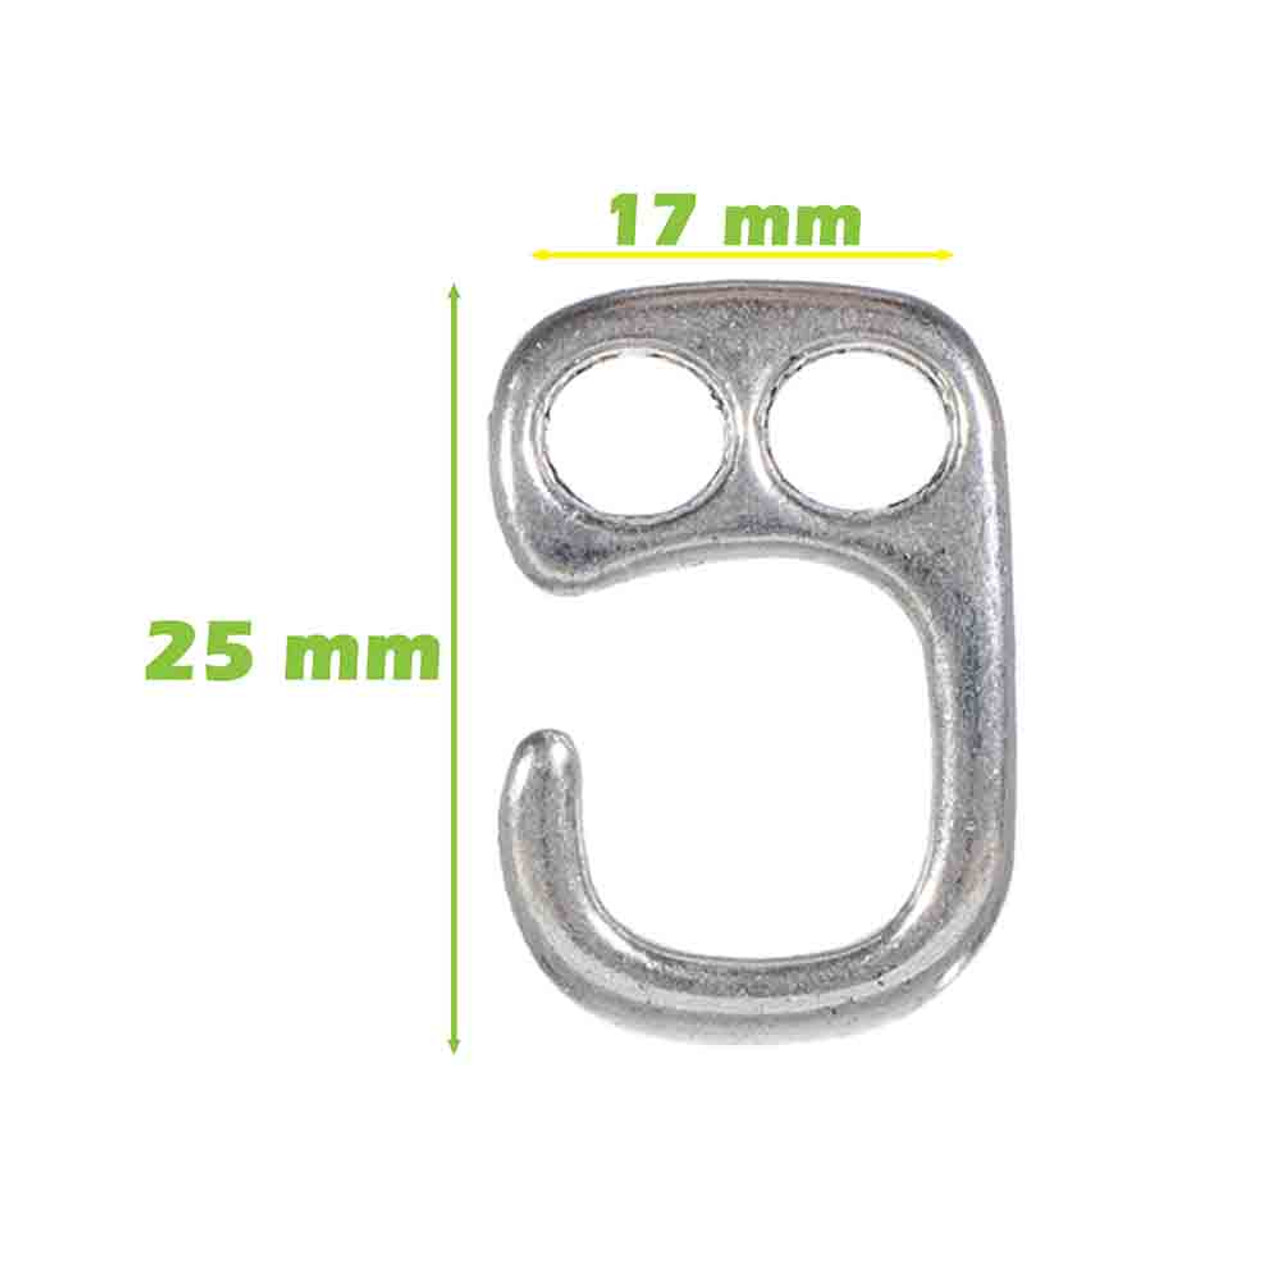 2 Hole Bracelet Hook Clasp - Bronze and Silver